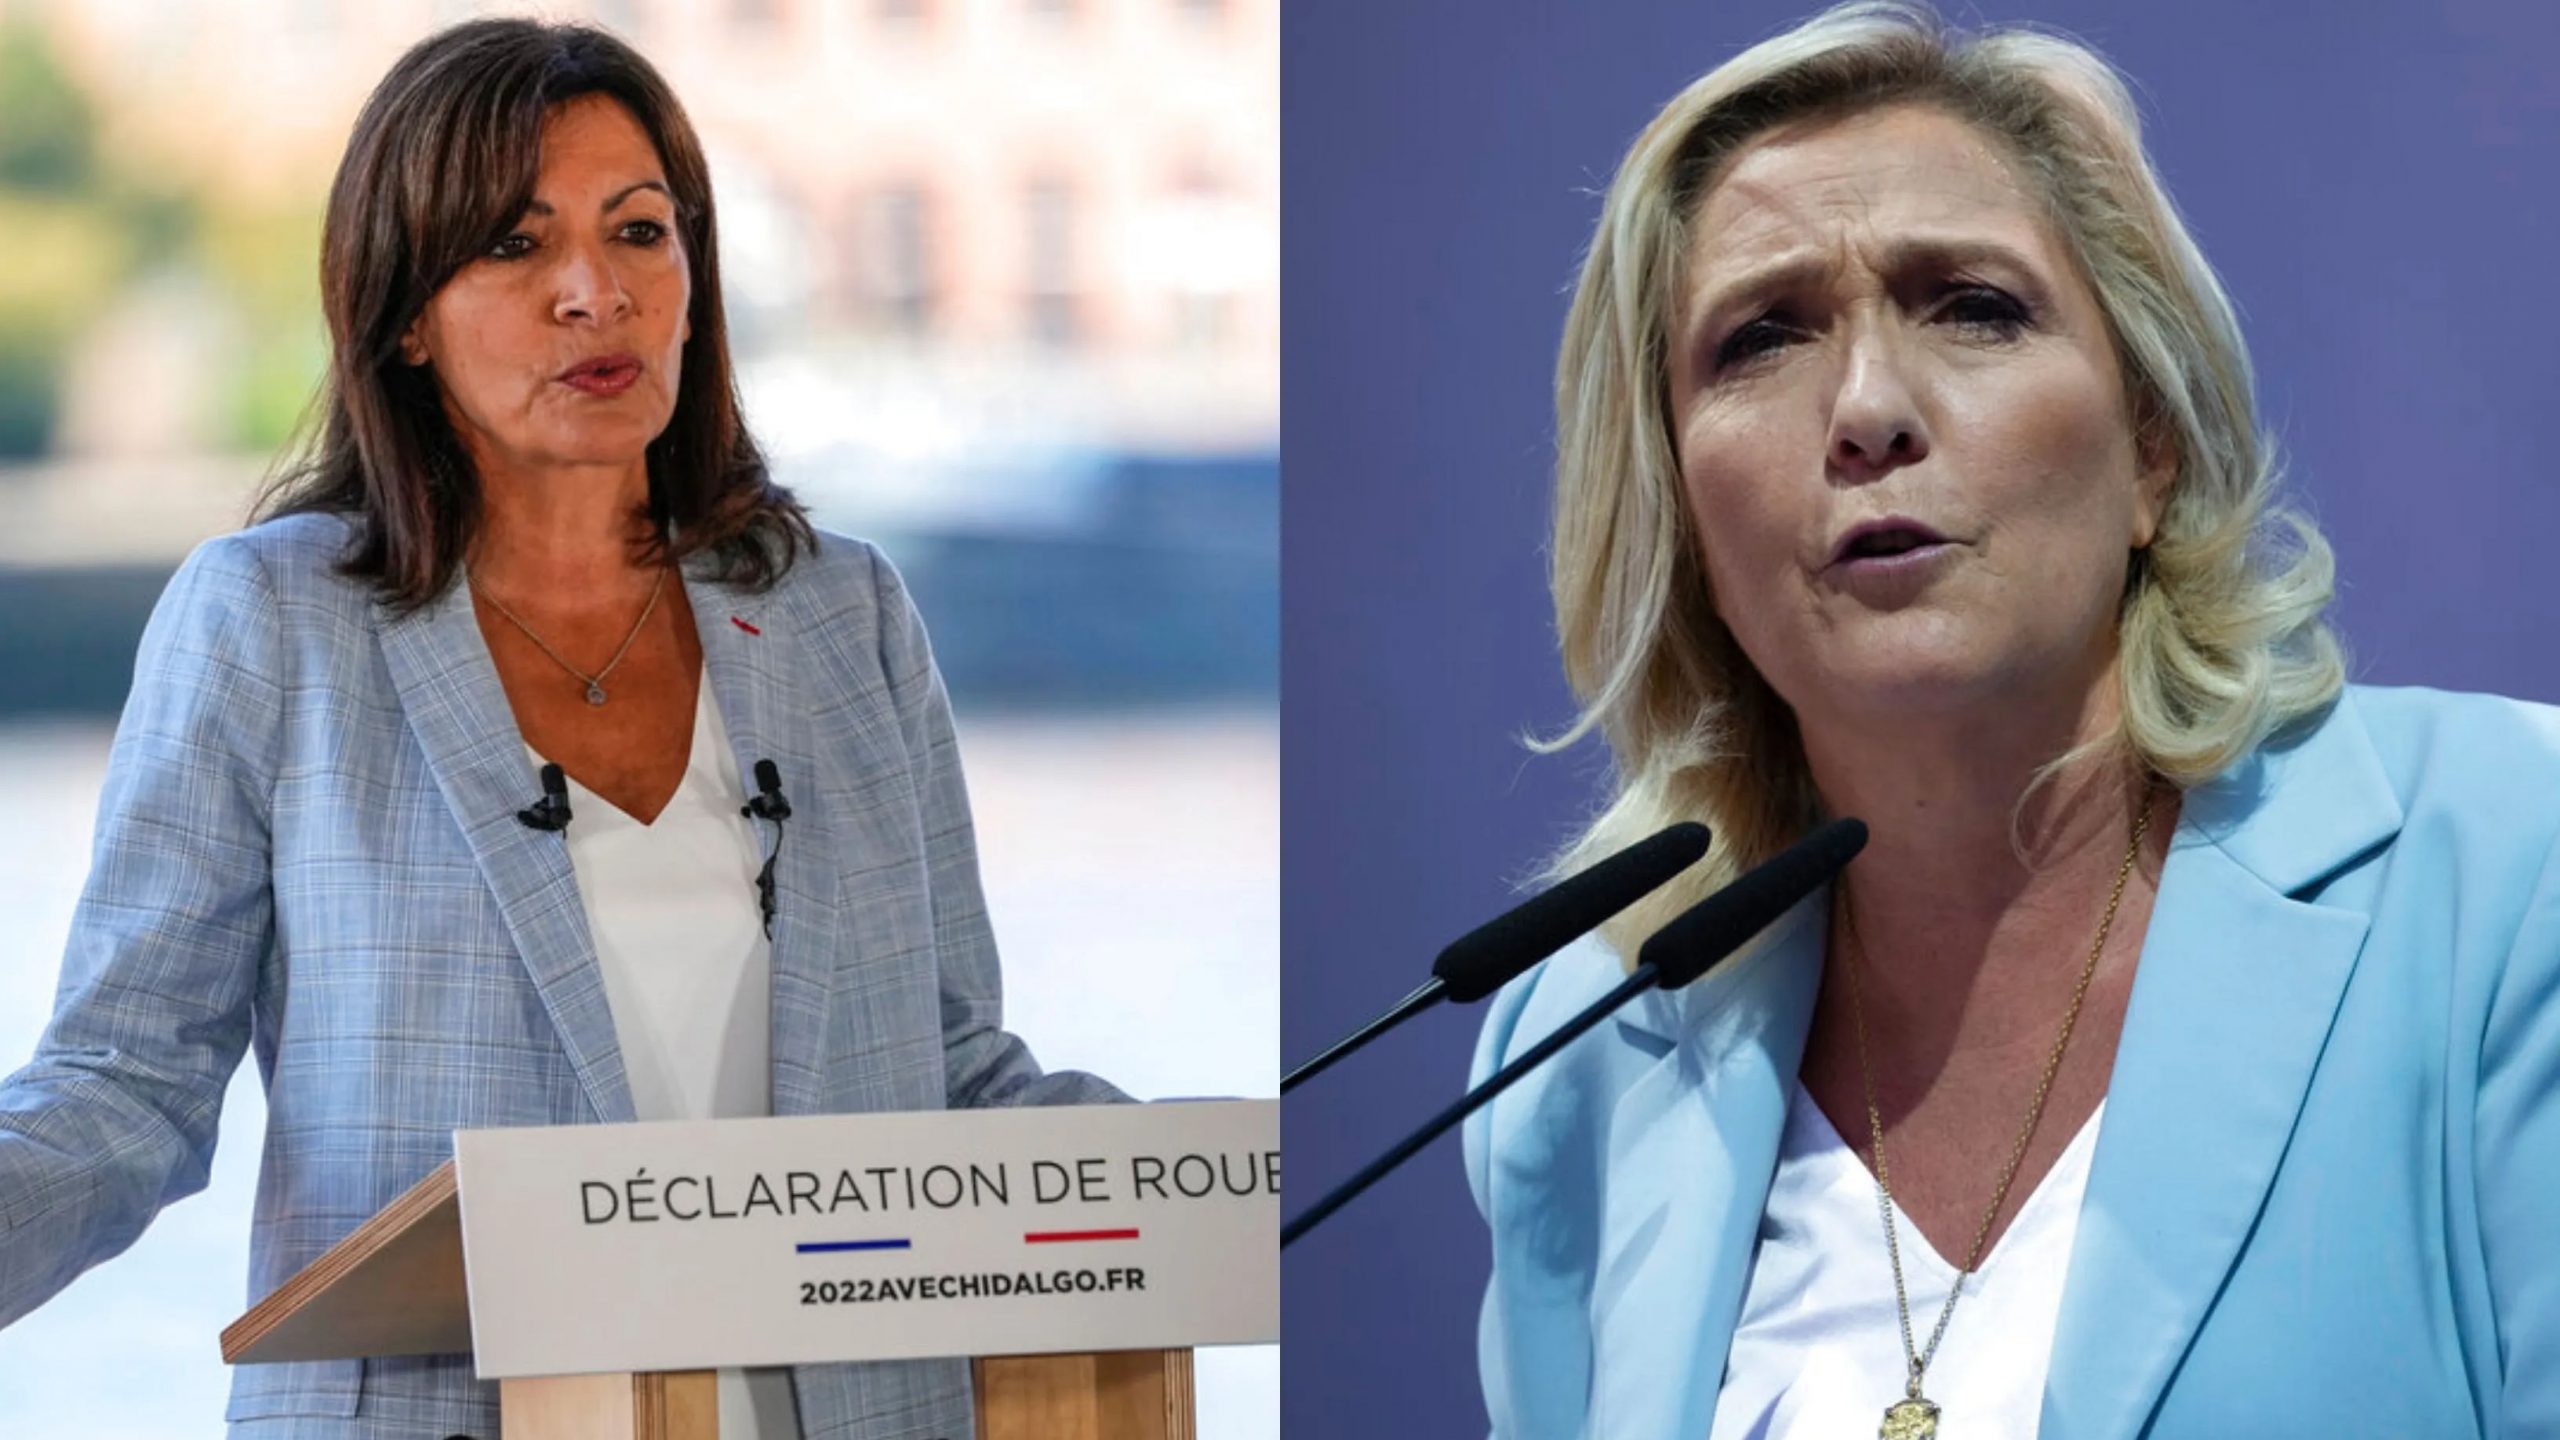 Marine Le Pen, Anne Hidalgo seek to become France’s 1st female president